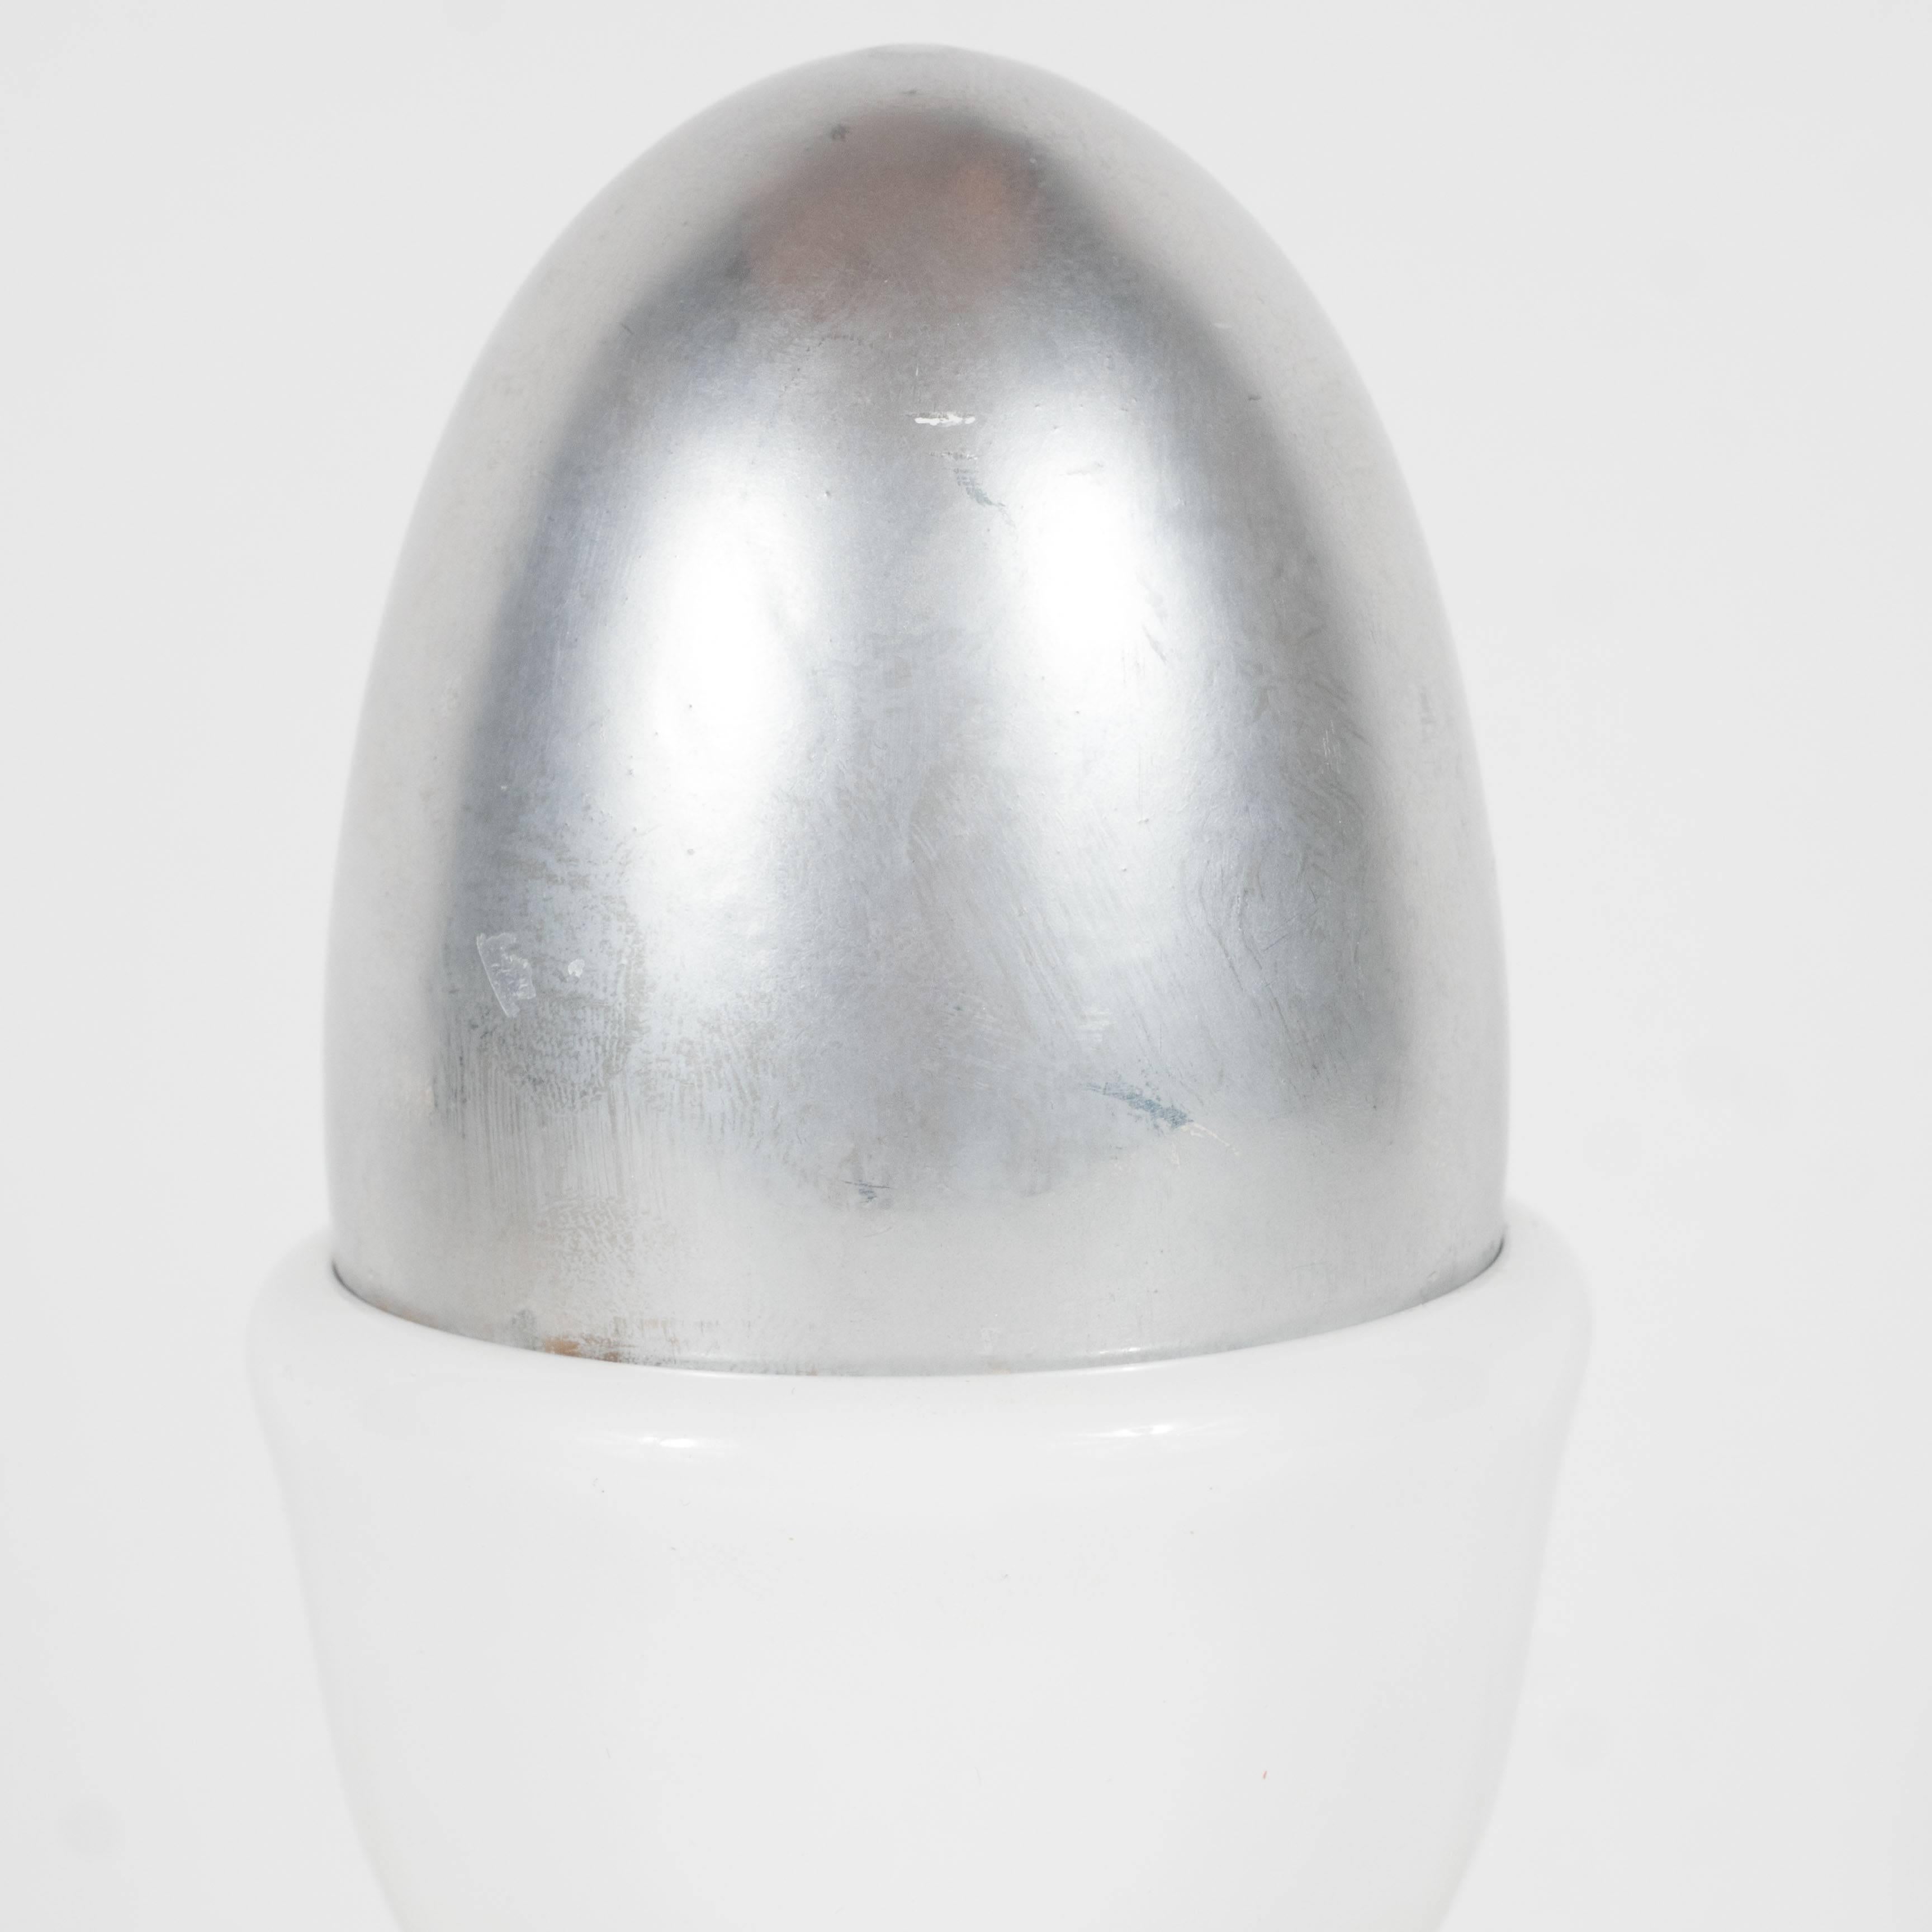 American Pop Art Sculpture of a Silver Egg by Herbert Distel, circa 1968 For Sale